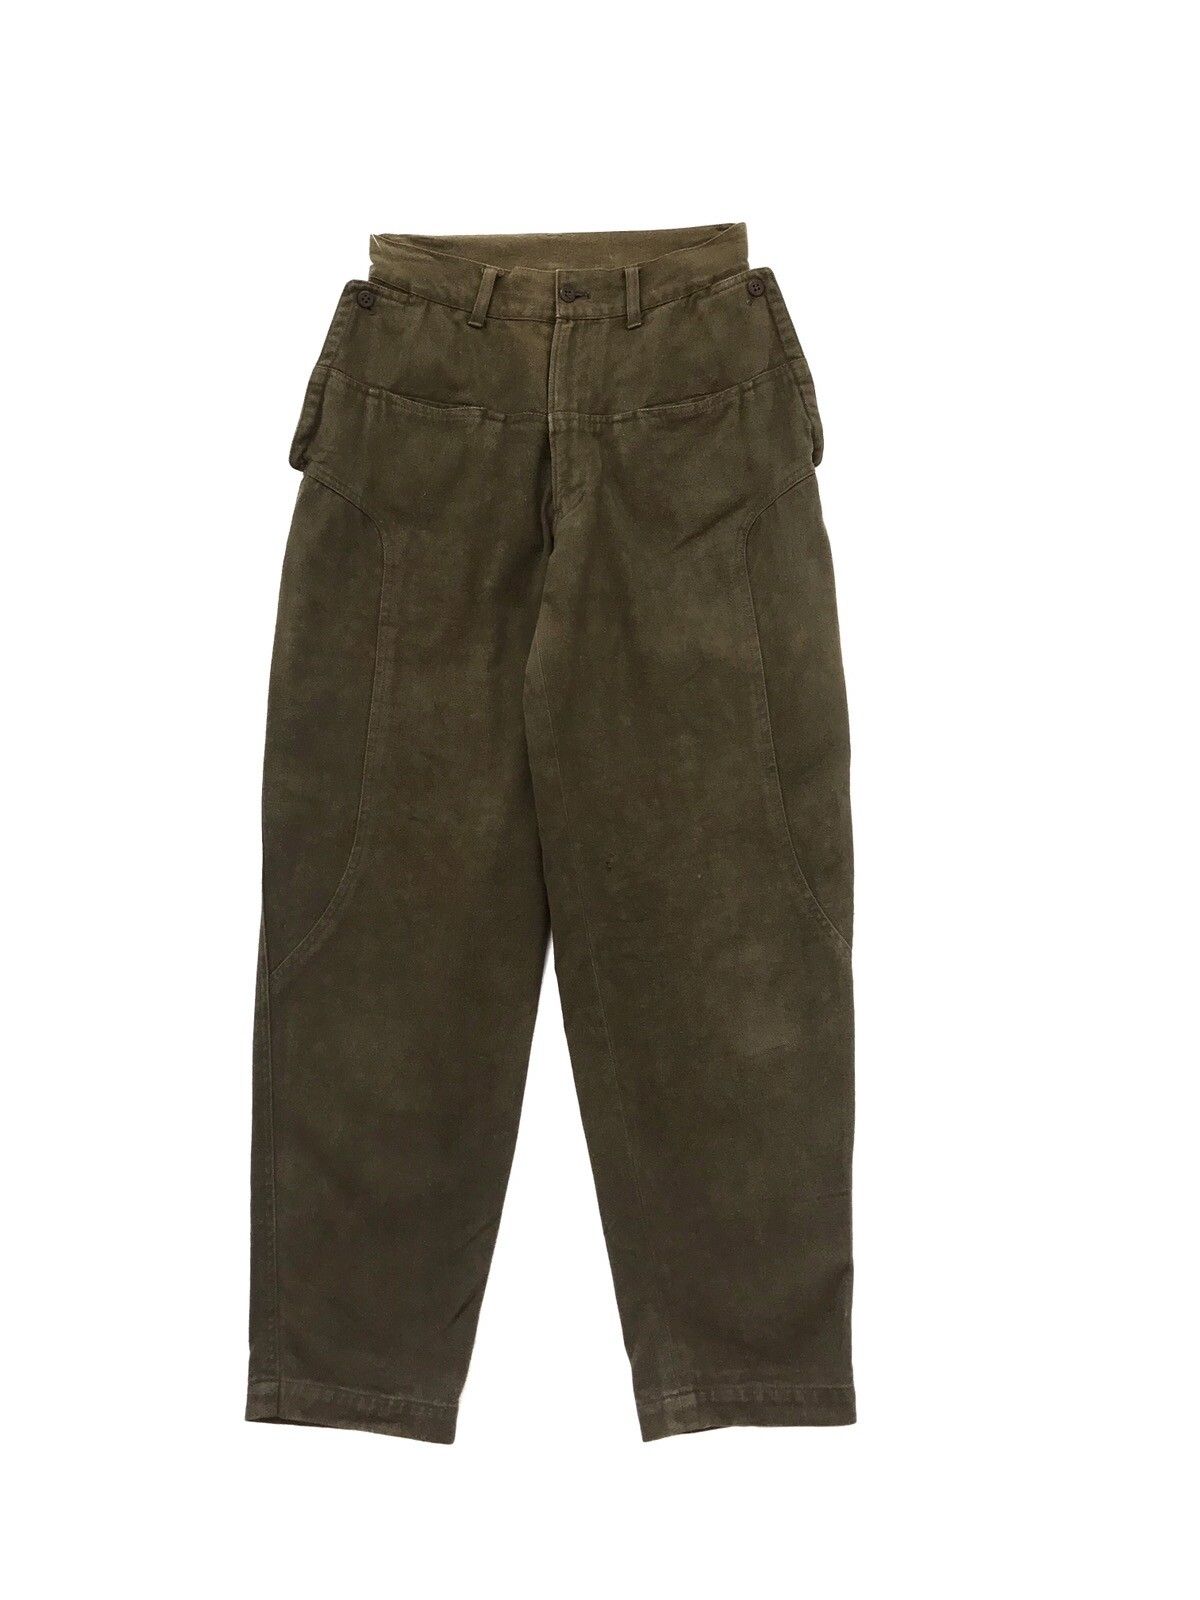 Designer Vintage Grass Men's JUN SAITO 6 Pocket Trouser Pants | Grailed